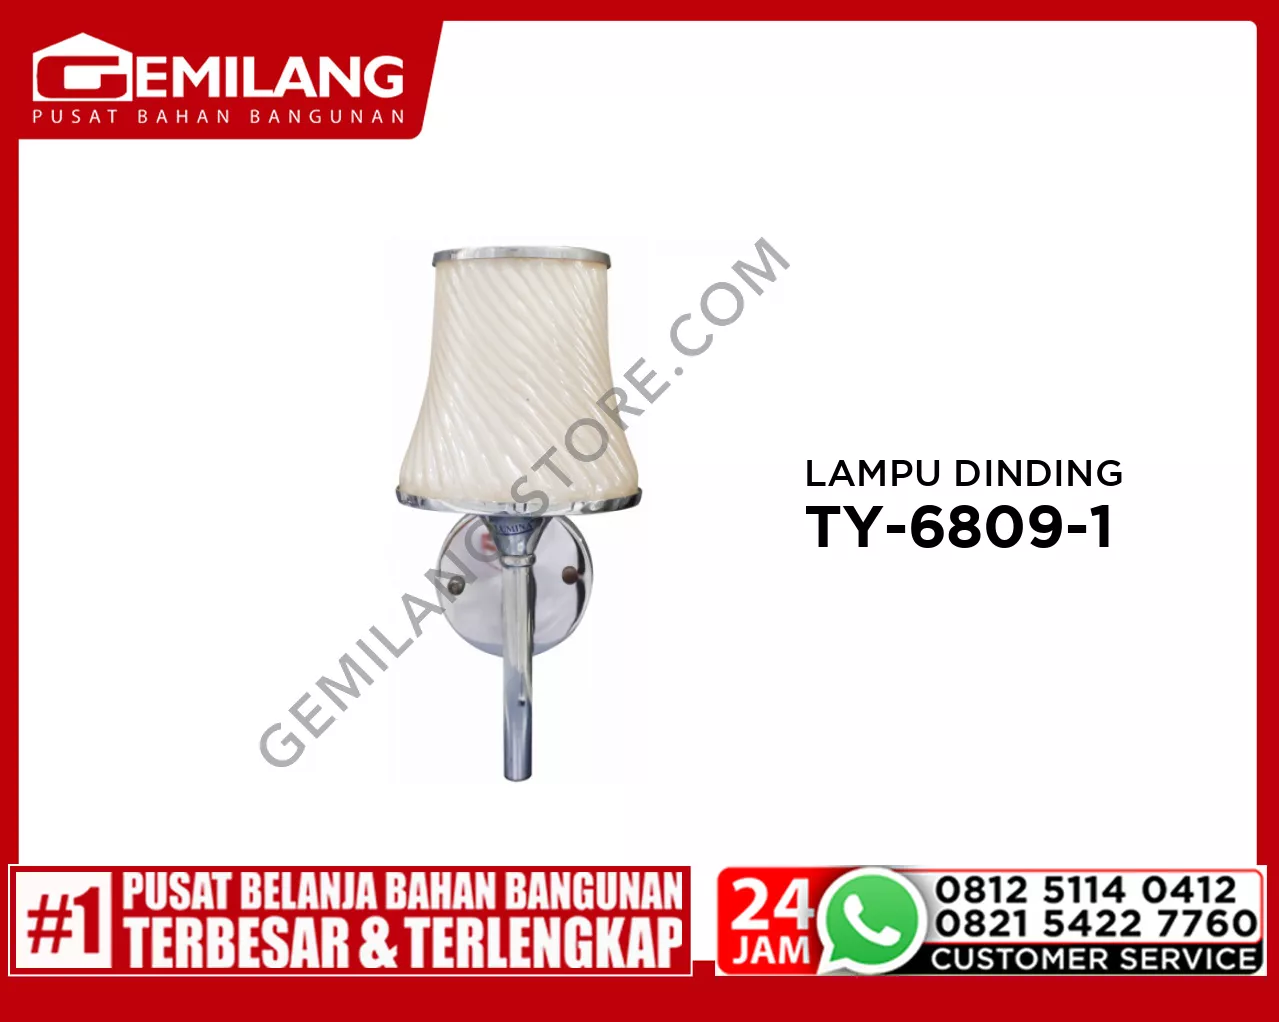 LAMPU DINDING TY-6809-1